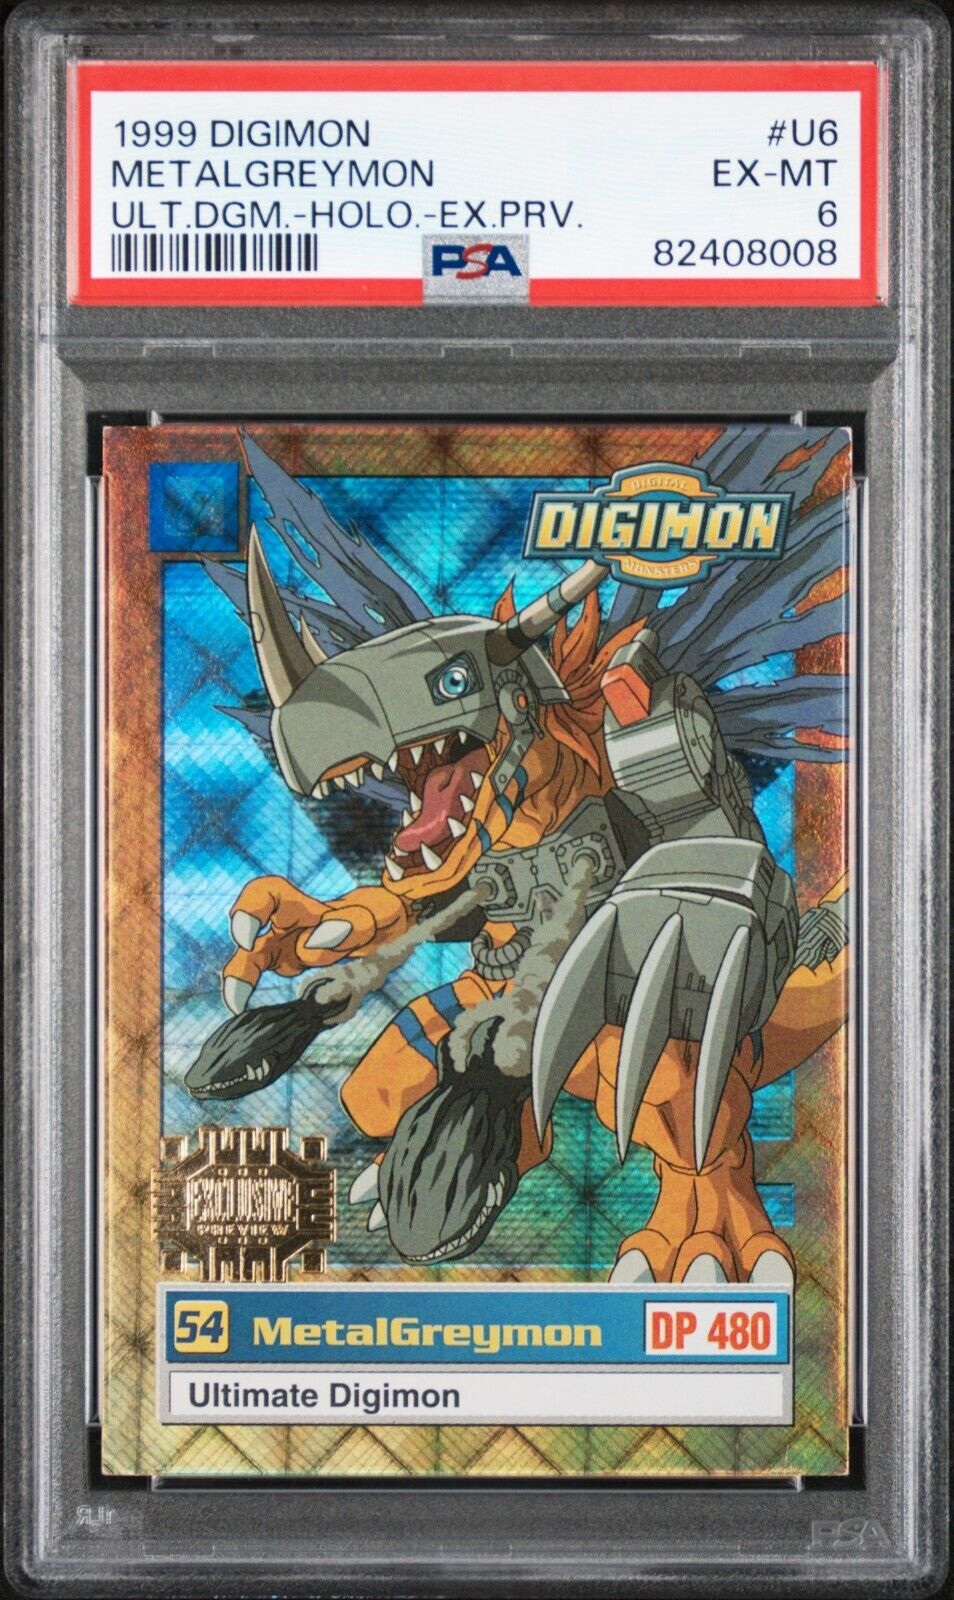 1999 Upper Deck - Digimon Exclusive Preview MetalGreymon - Holo/Stamp U6 - PSA 6